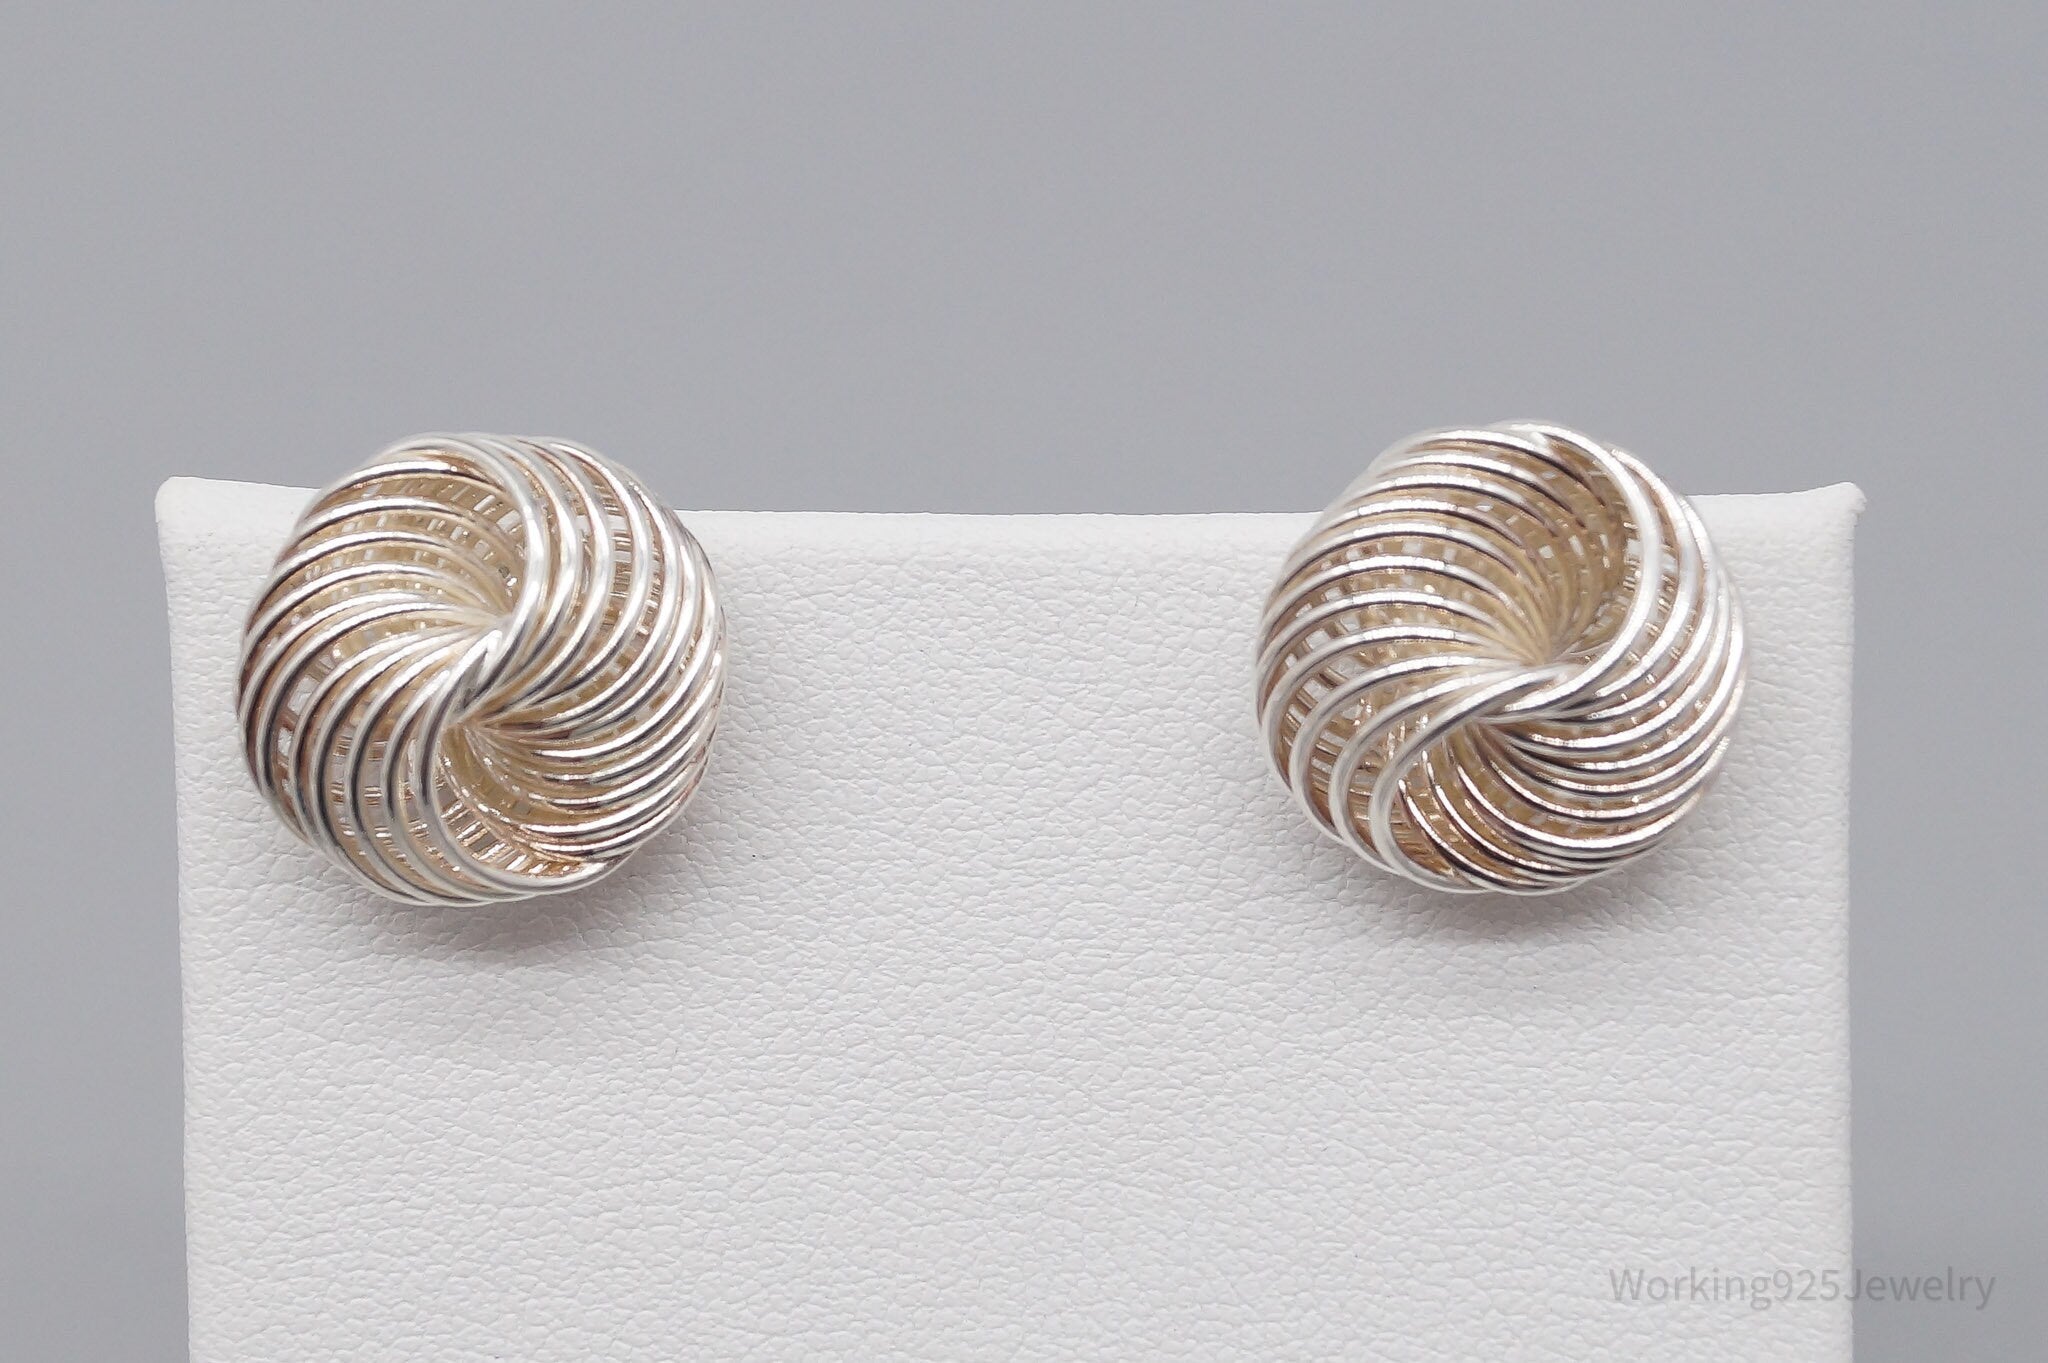 Vintage Sleek Modernist Style Spiral Knot Sterling Silver Earrings